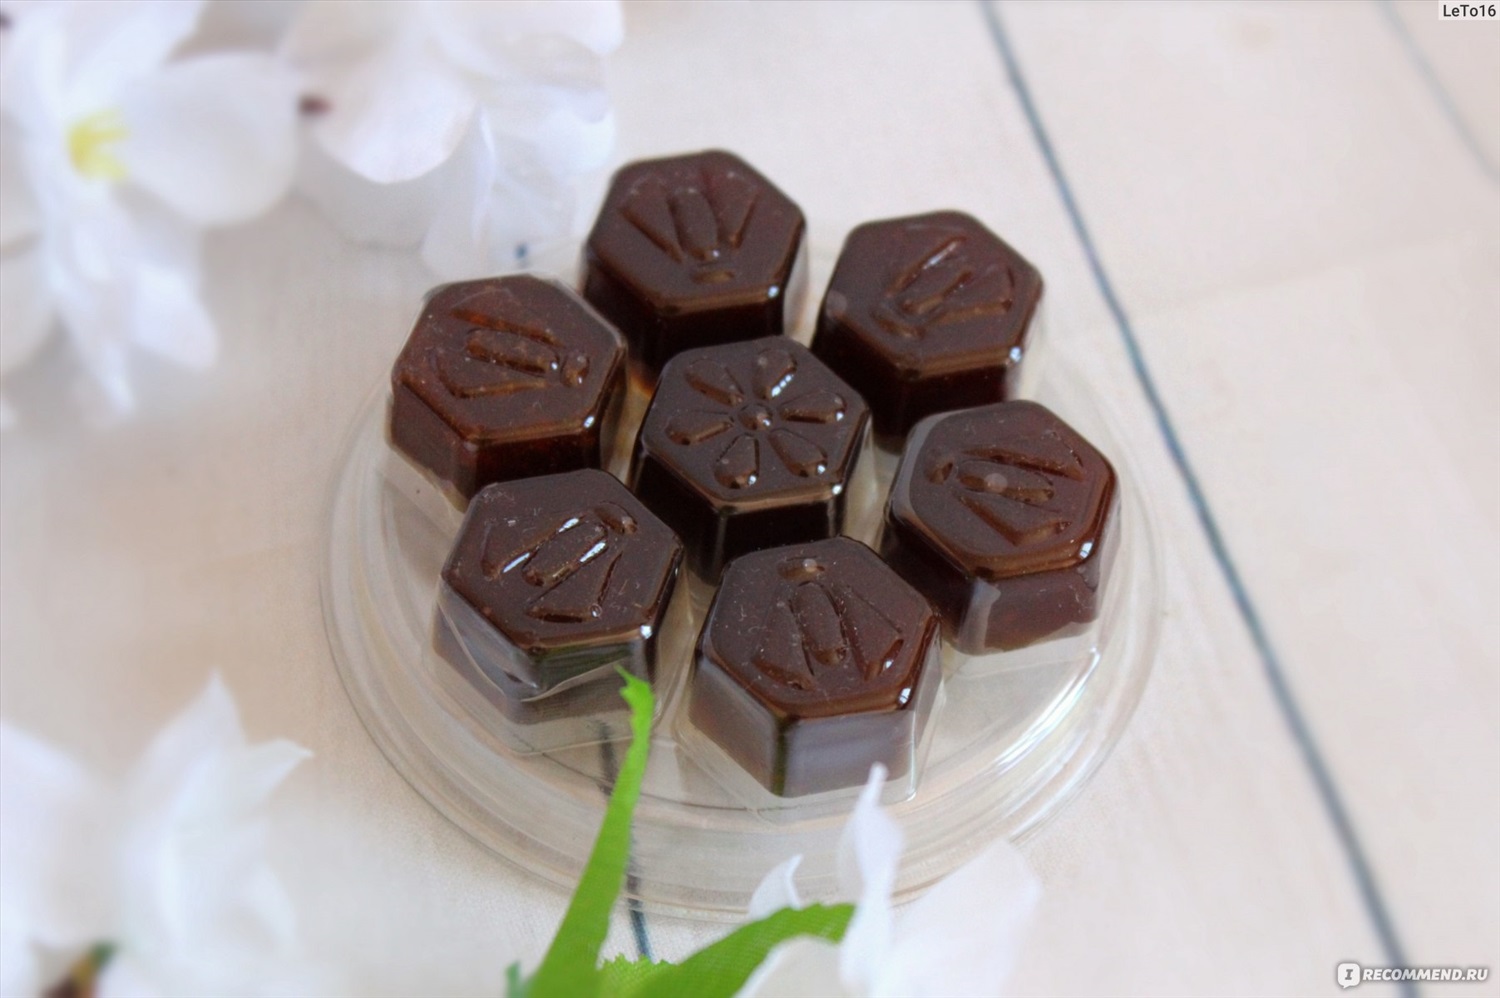 Сливочно-медовые конфеты ириски рецепт с фото